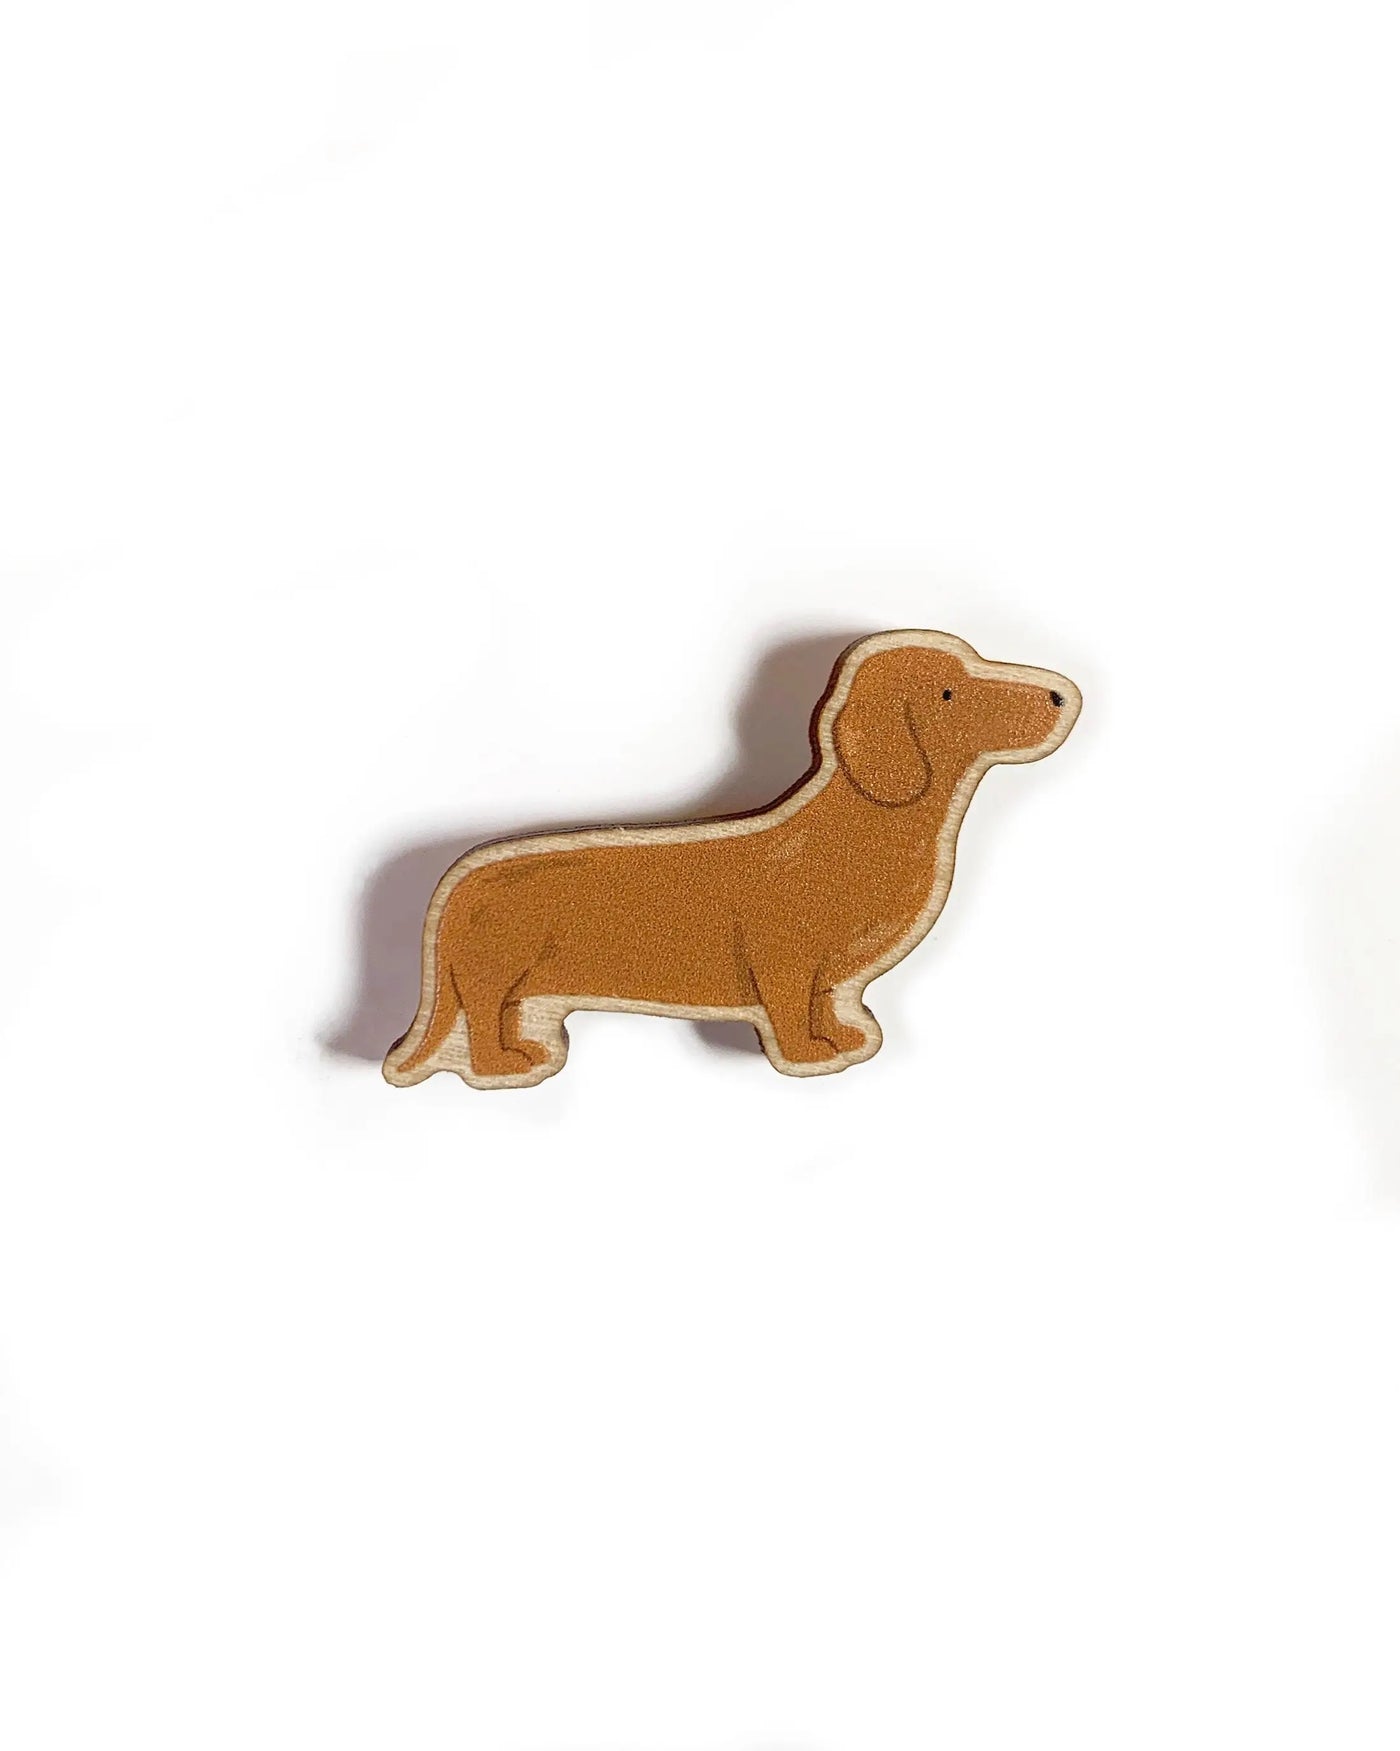 Pin on Designer Dog Clothes